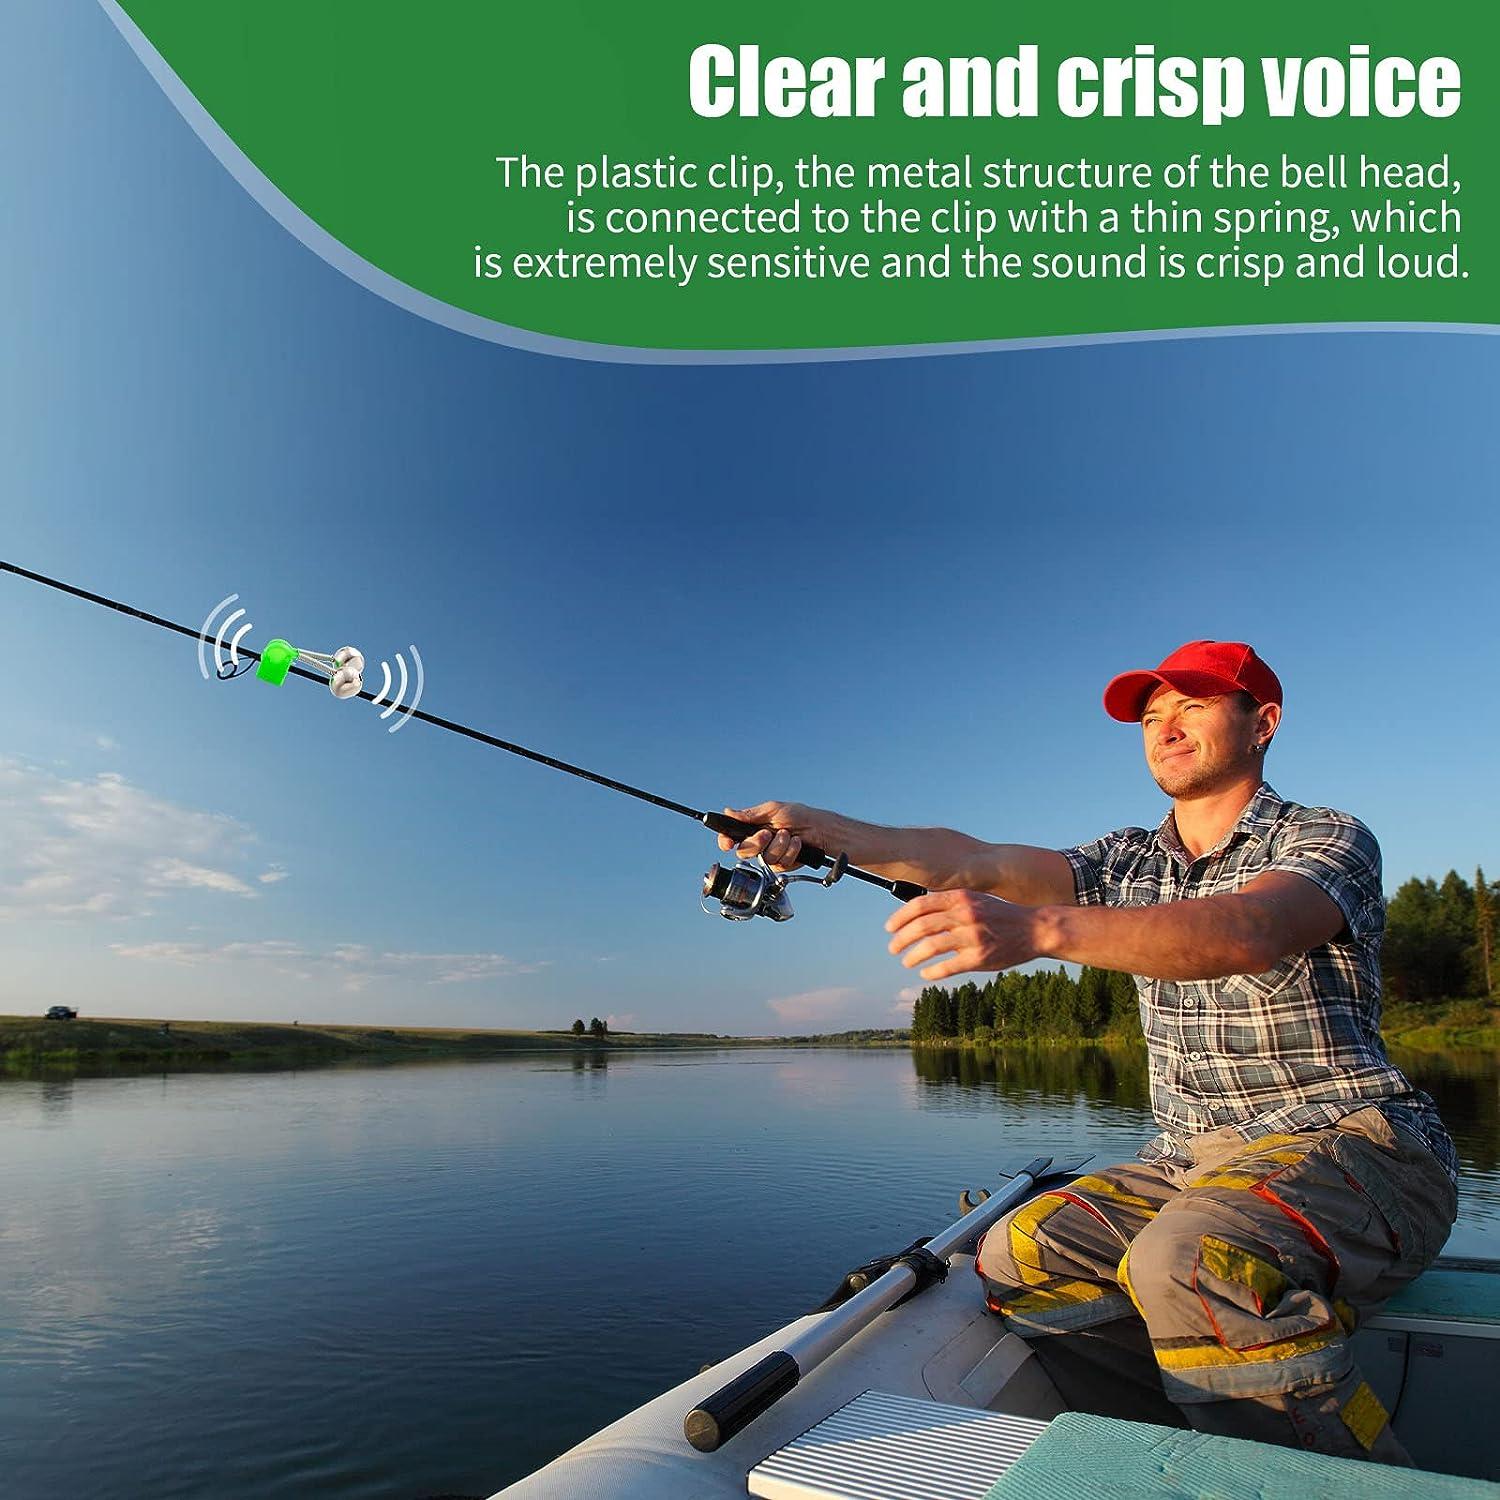 Honoson 200 Pcs Plastic Fishing Bells Clip on Fishing Rod Alarm Bell Fish  Bite Alarm Fishing Bite Indicators with Dual Alert Bells